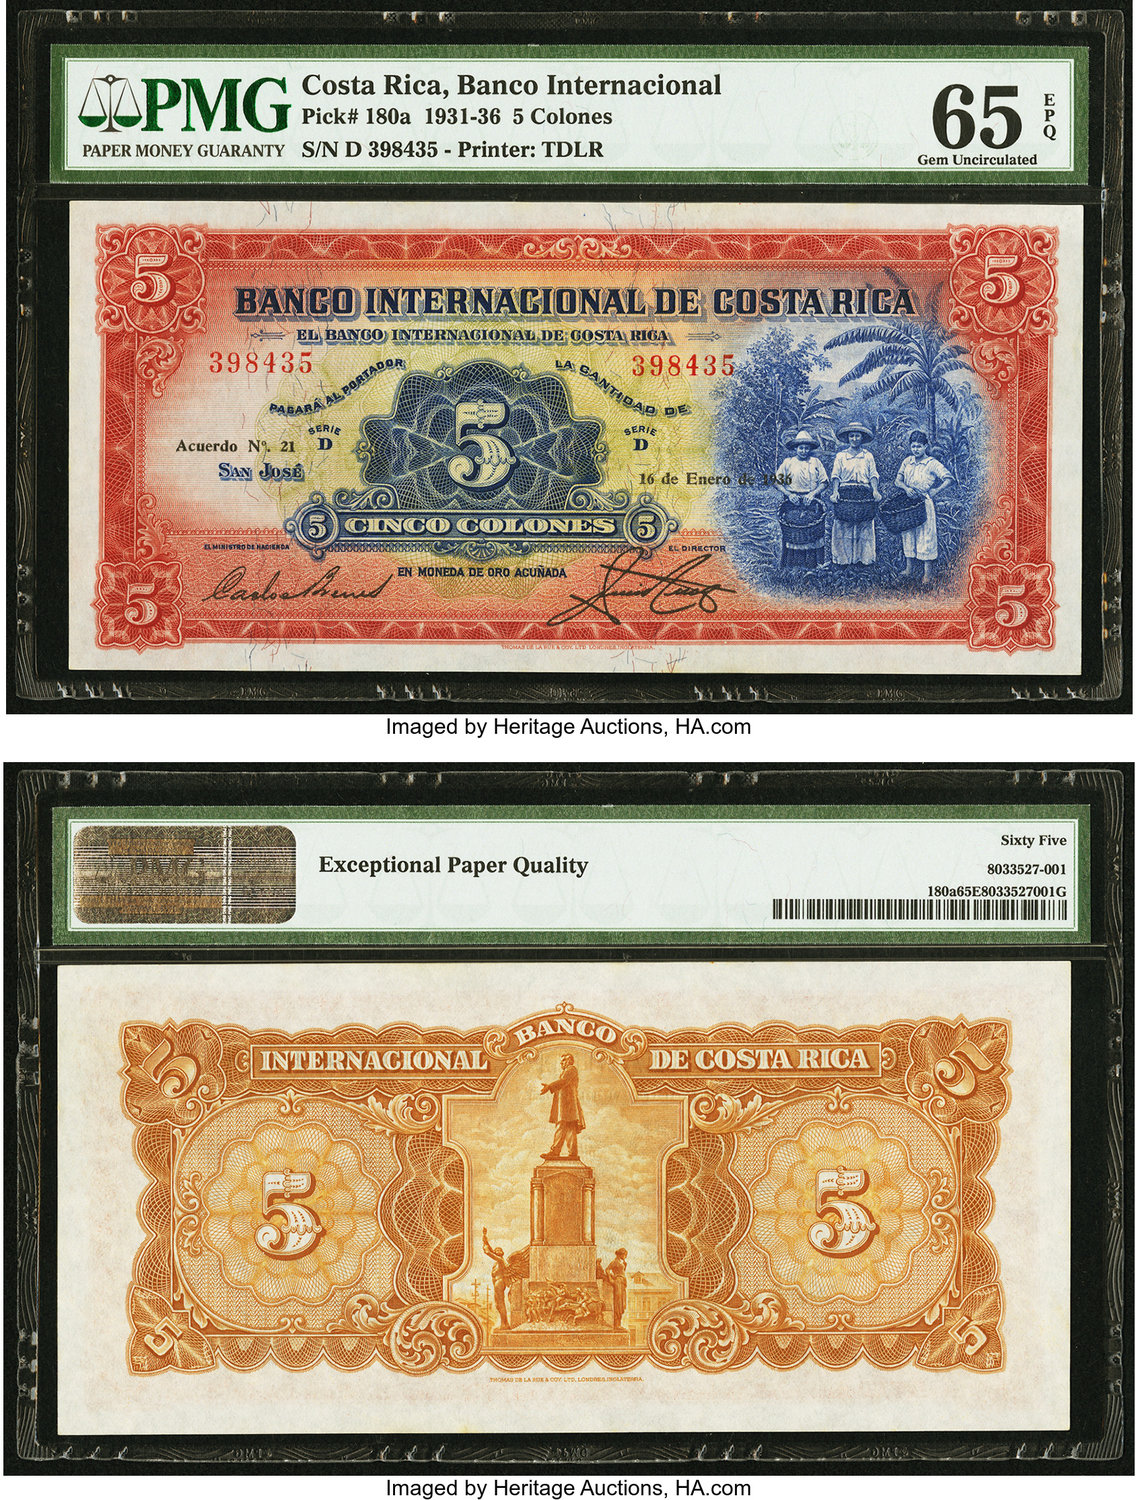 1983 5 Colones Costa Rica Pick-Nr: 236d bankfrisch Banknoten f/ür Sammler I